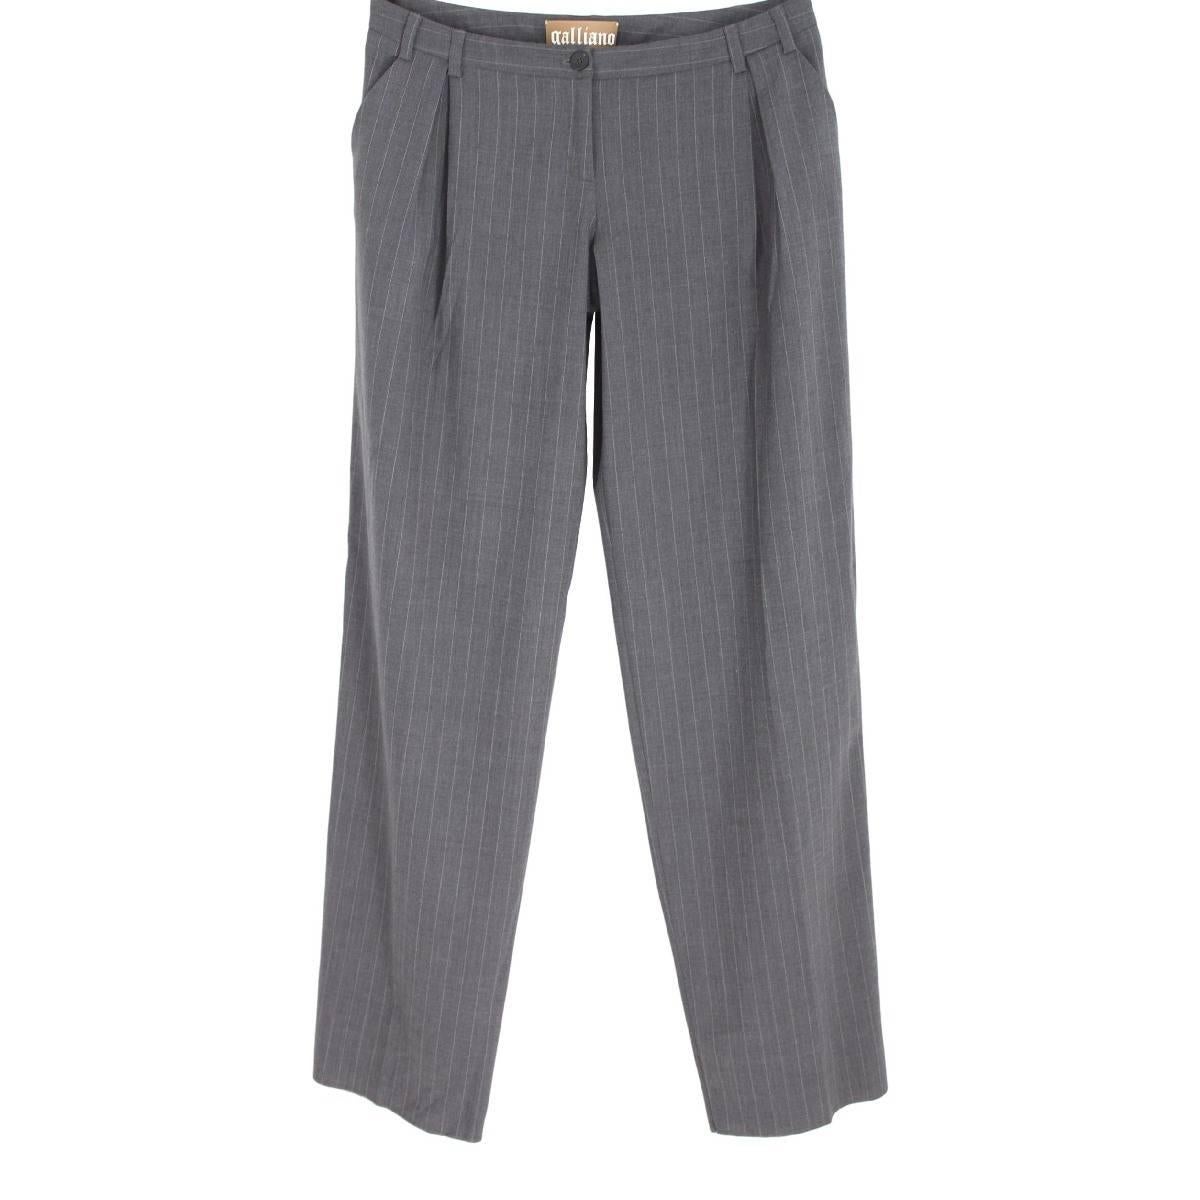 John Galliano vintage wide legs pants gray pinstripe worn palace 90s wool blend